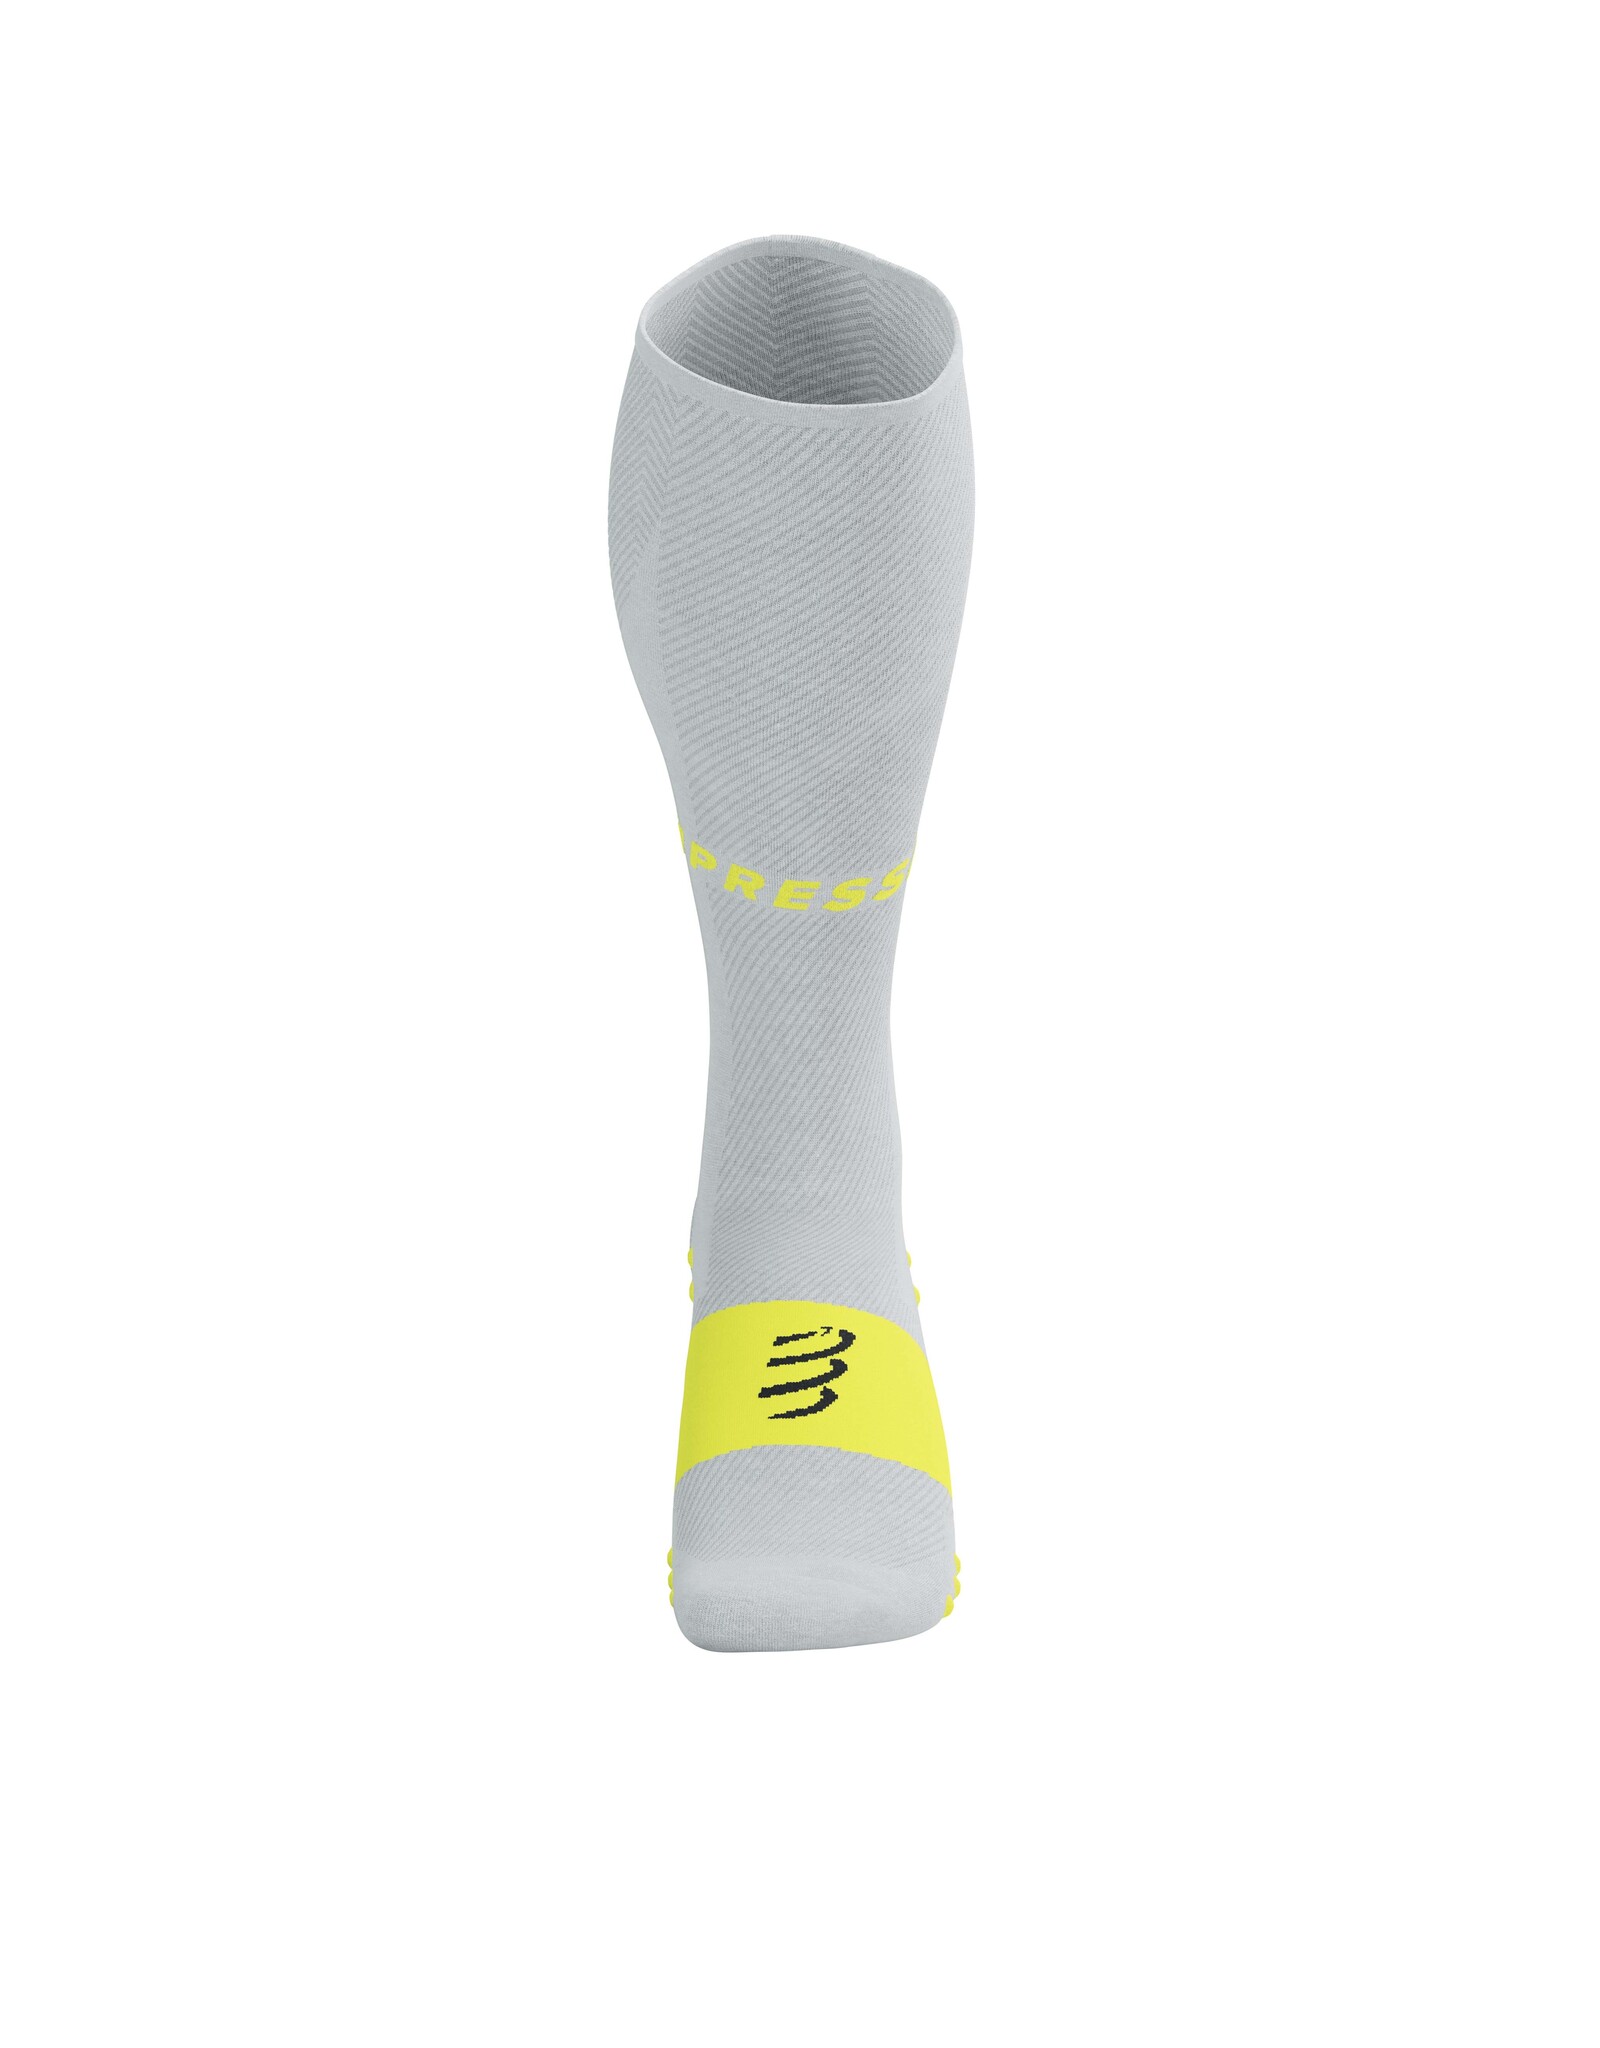 Compressport Full Socks Oxygen - Safety Yellow/White/Black